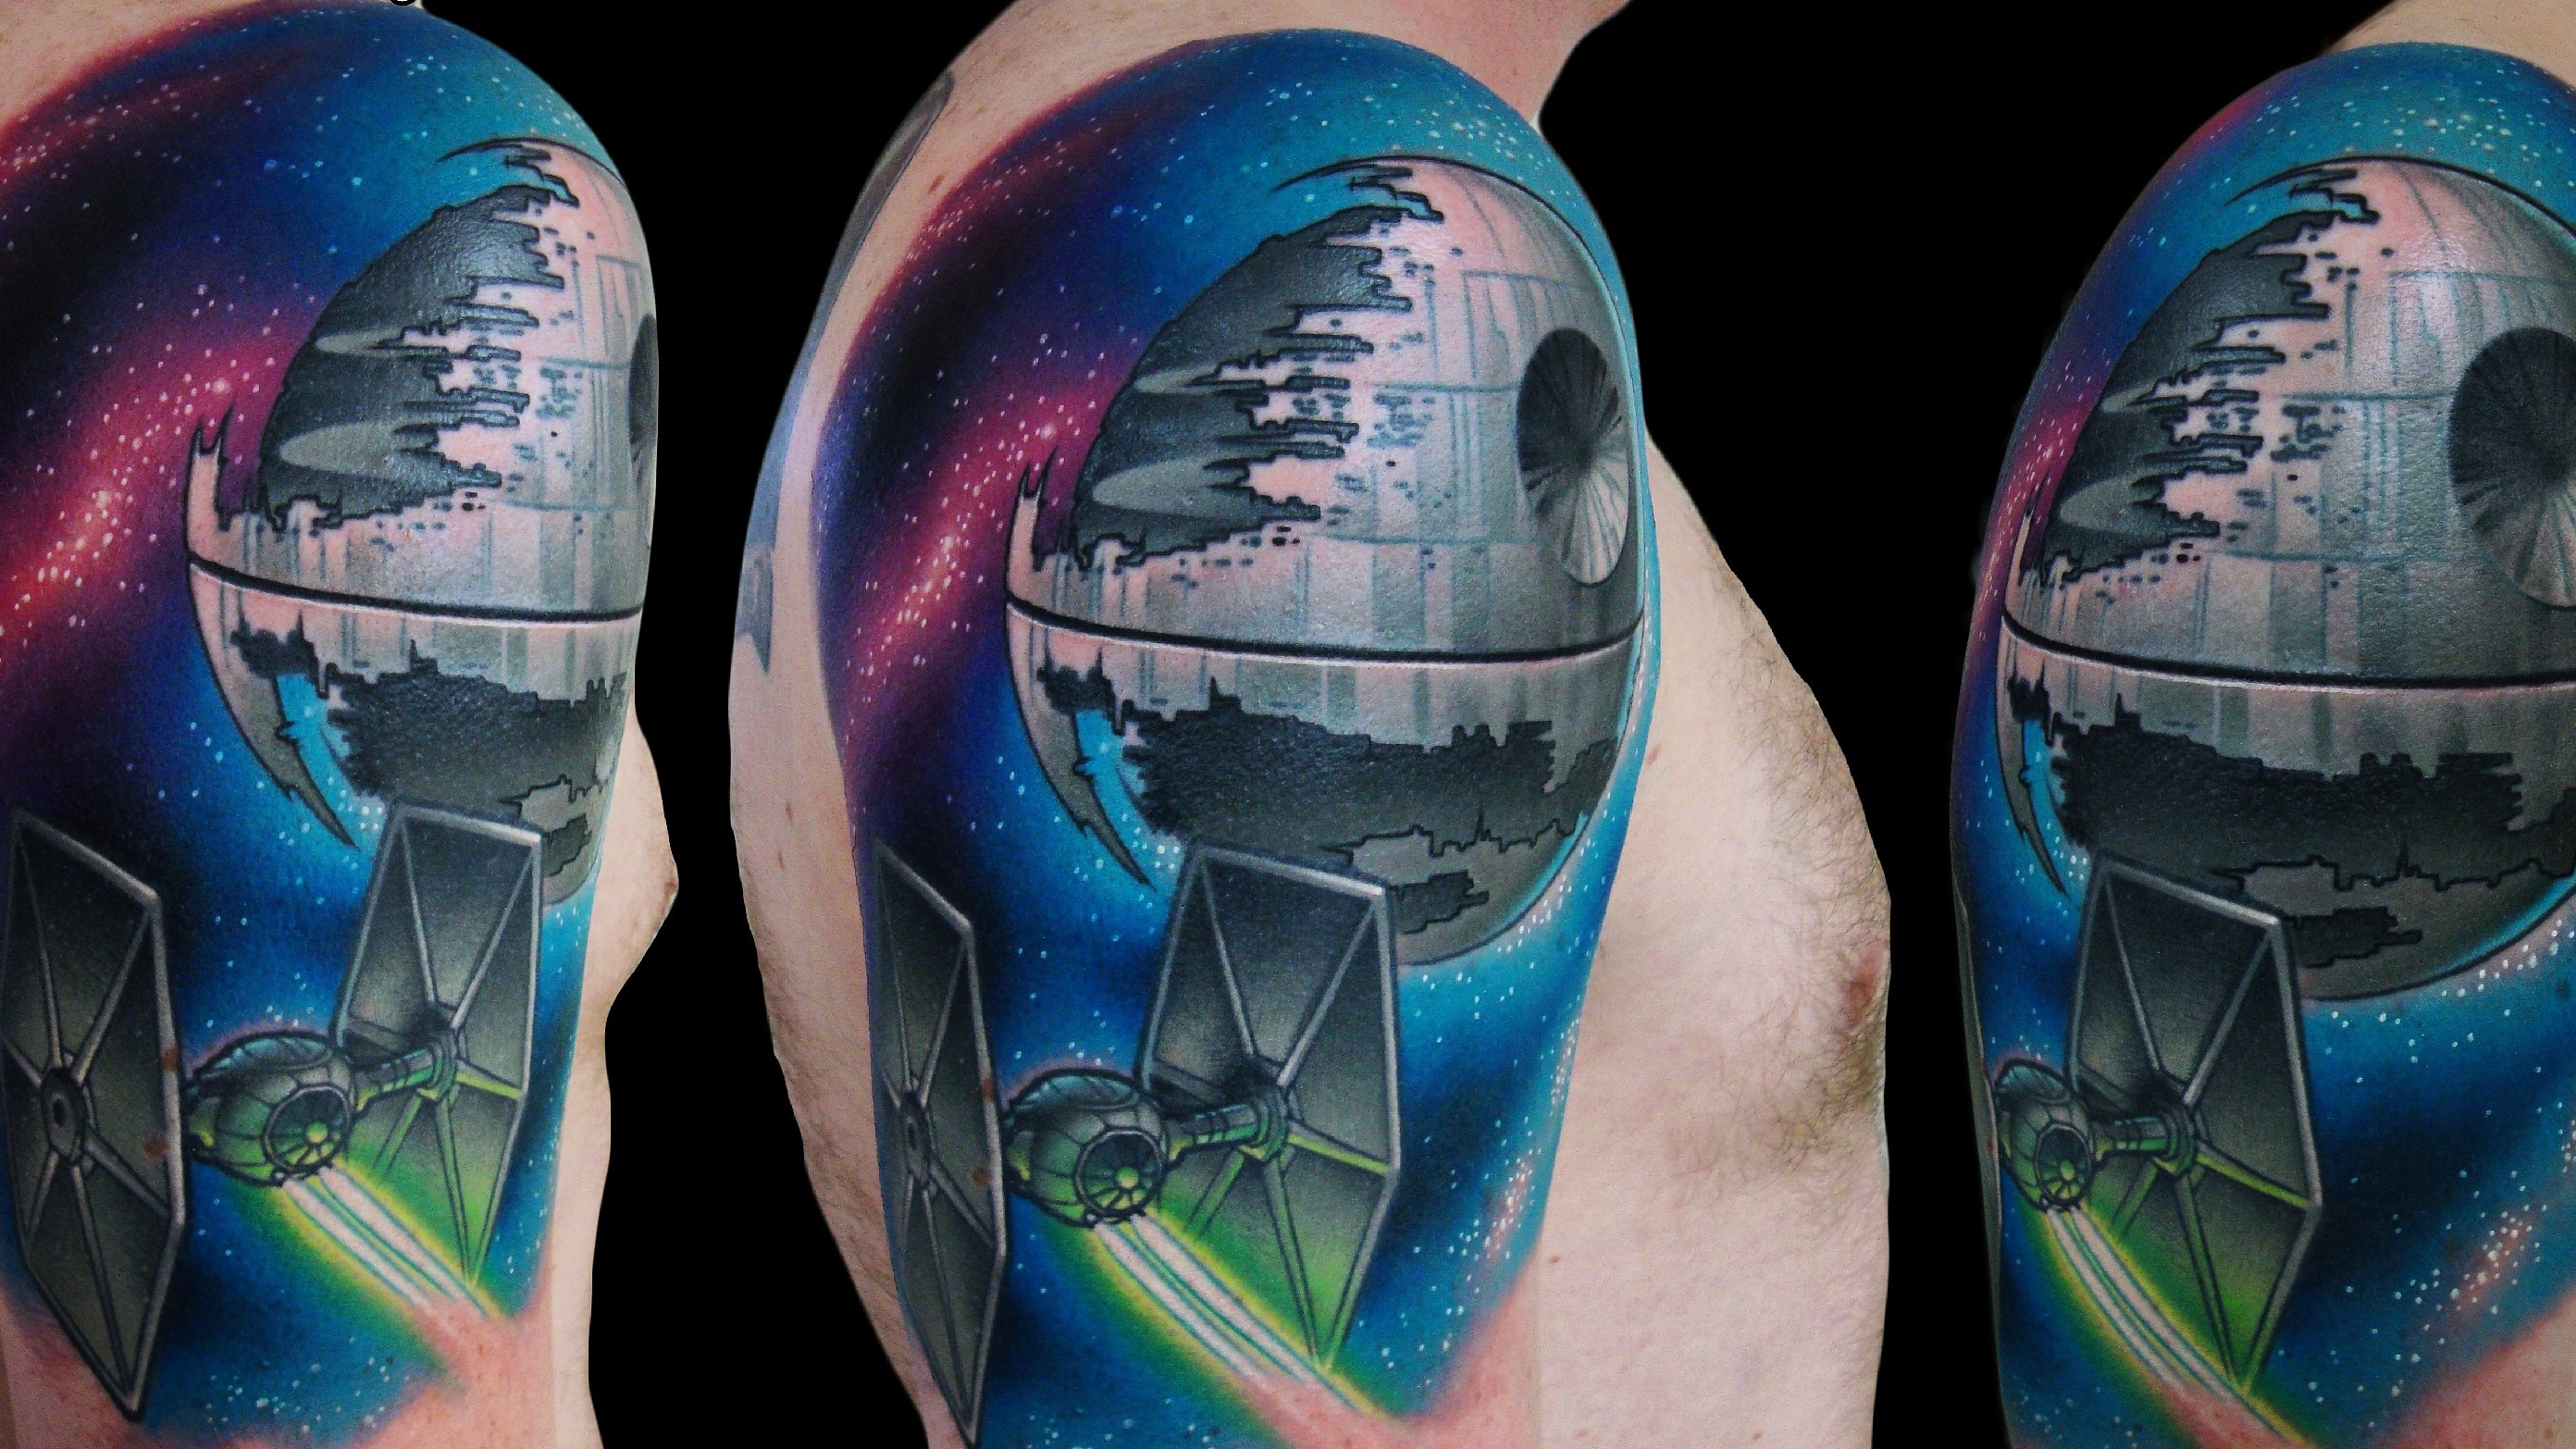 Star Wars Death Star Tattoo done by Cracker Joe Swider in Connecticut